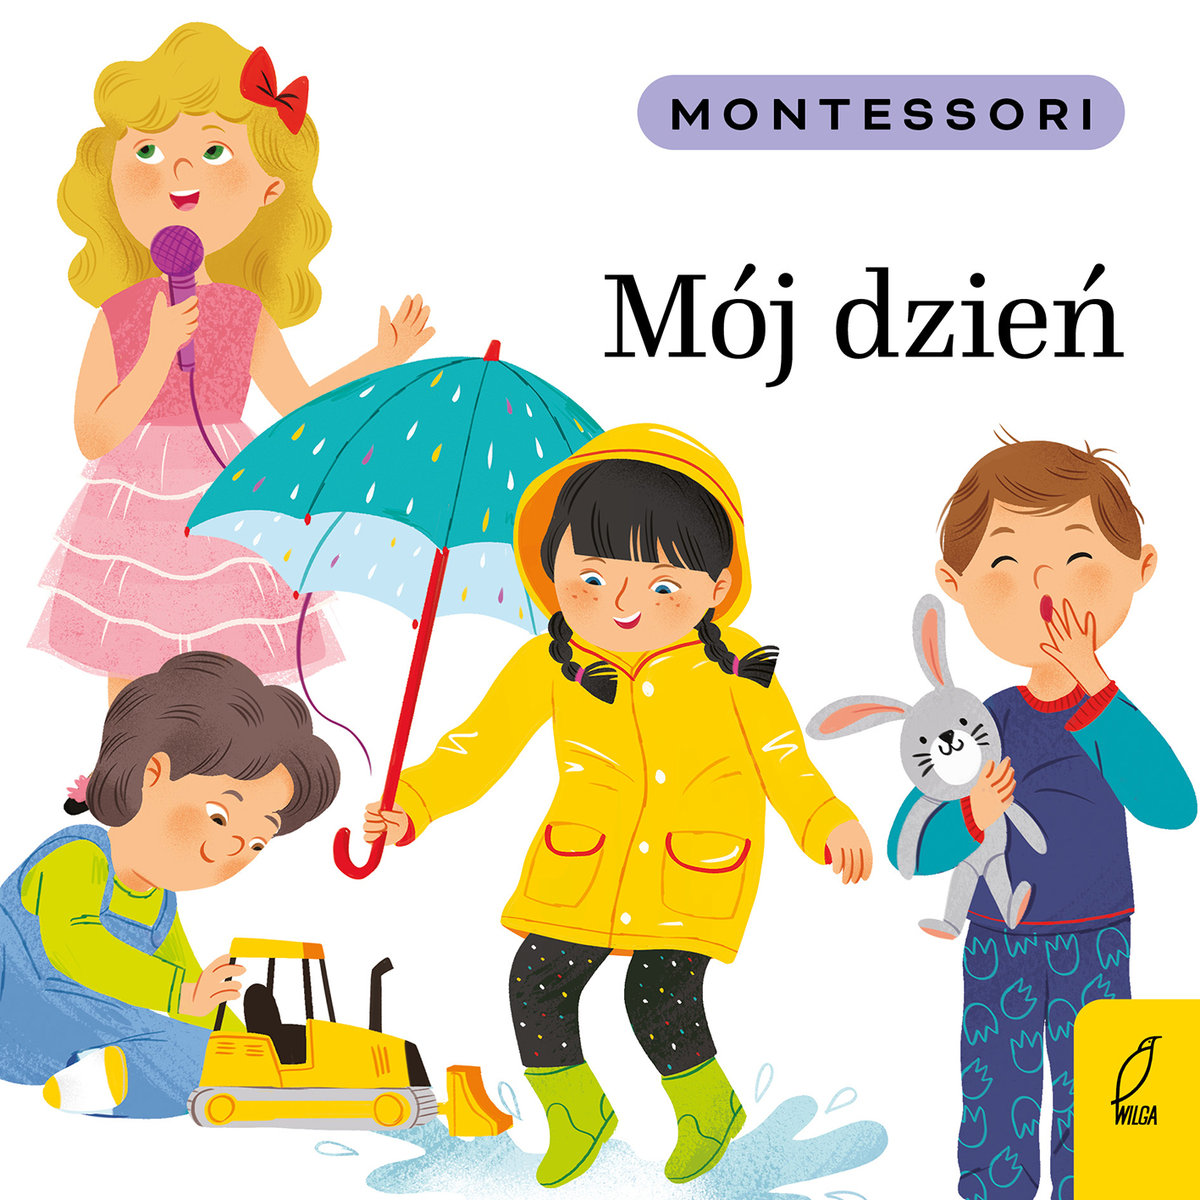 Montessori Moj dzien by . 